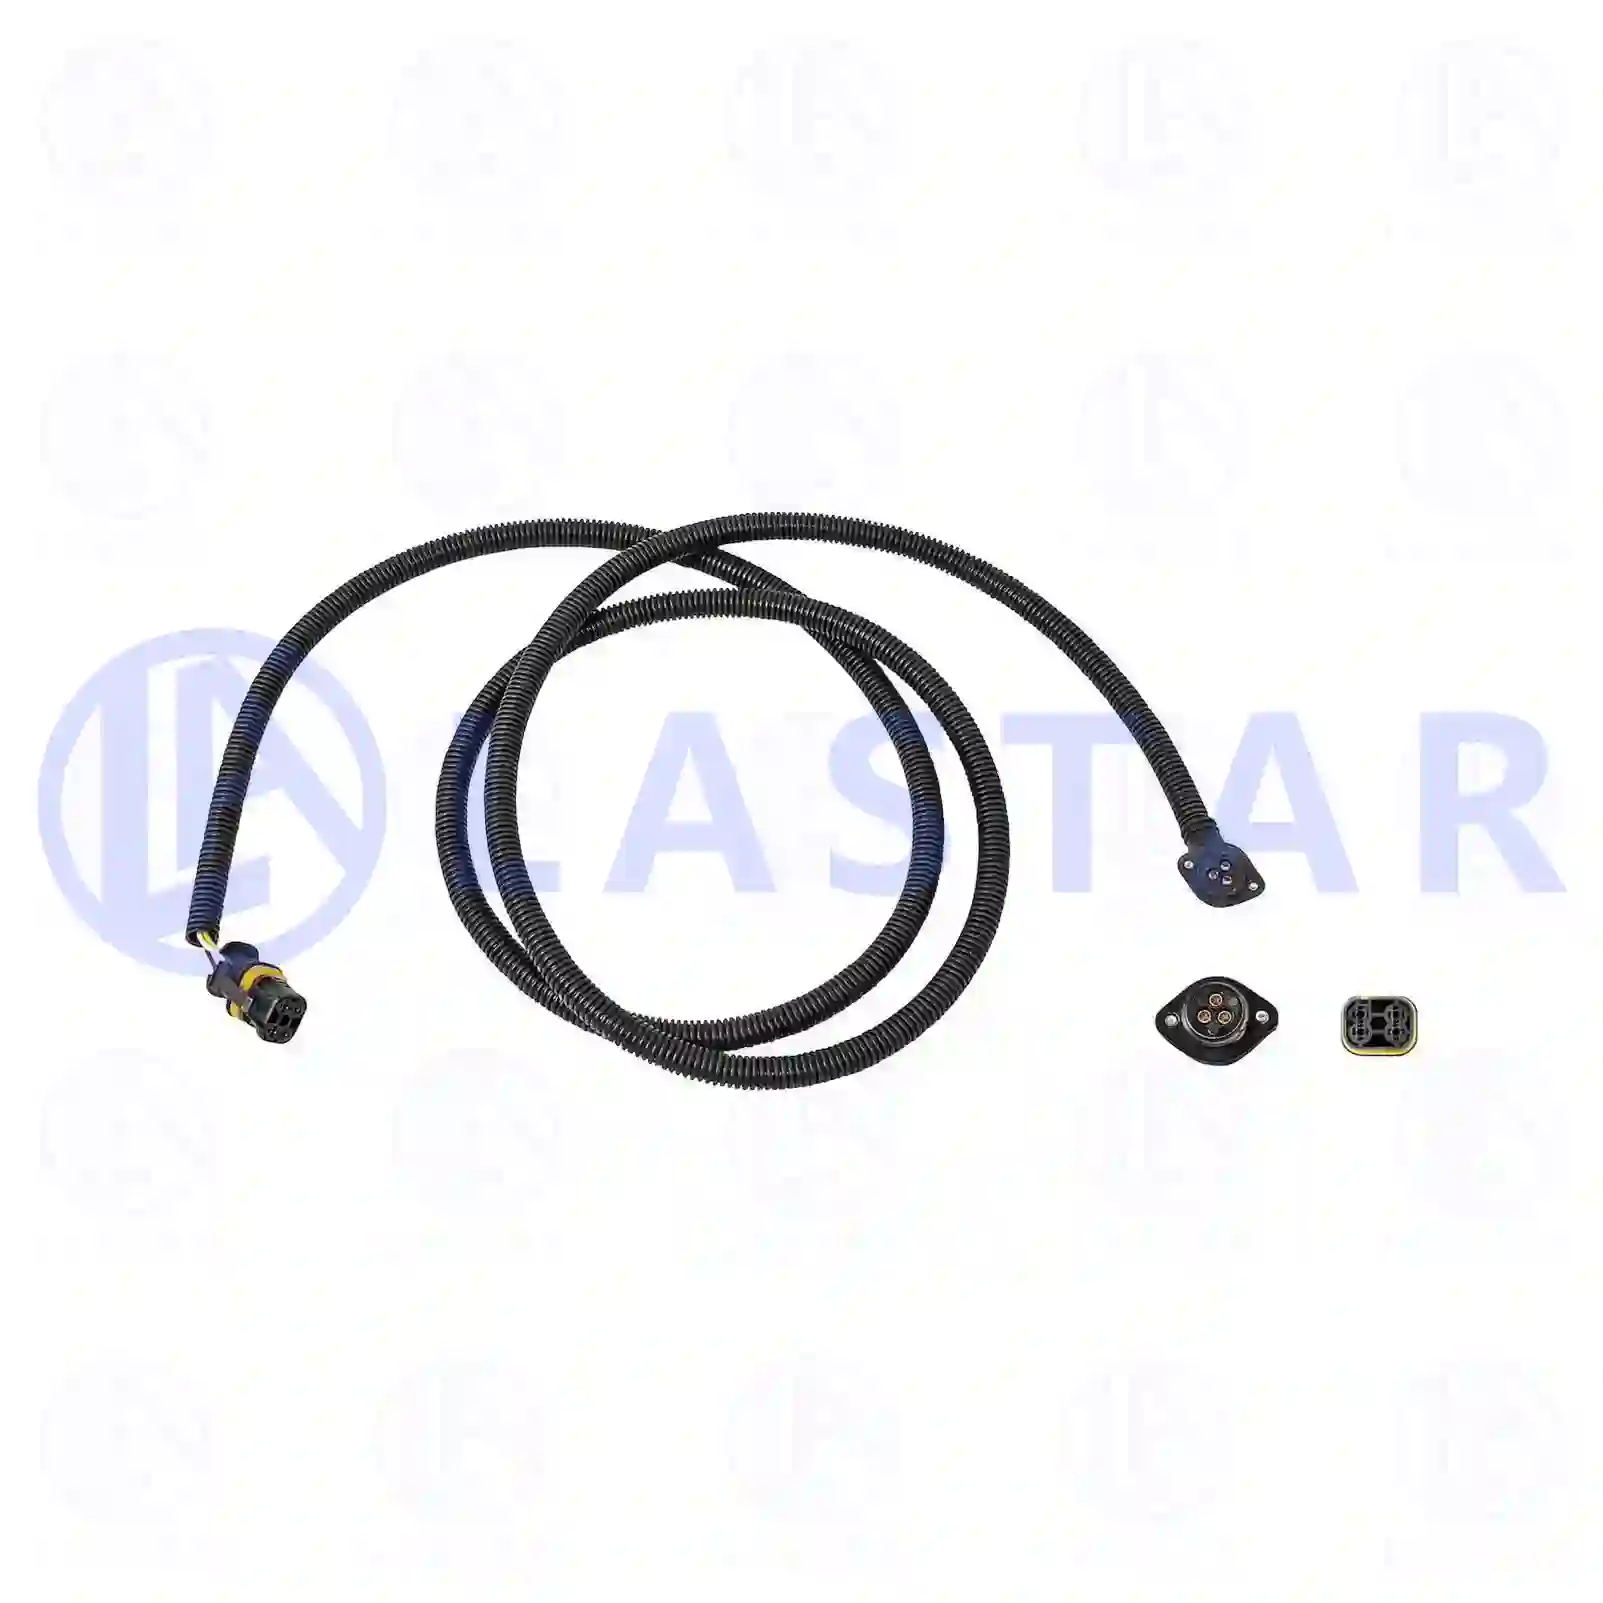  Cable harness, black || Lastar Spare Part | Truck Spare Parts, Auotomotive Spare Parts